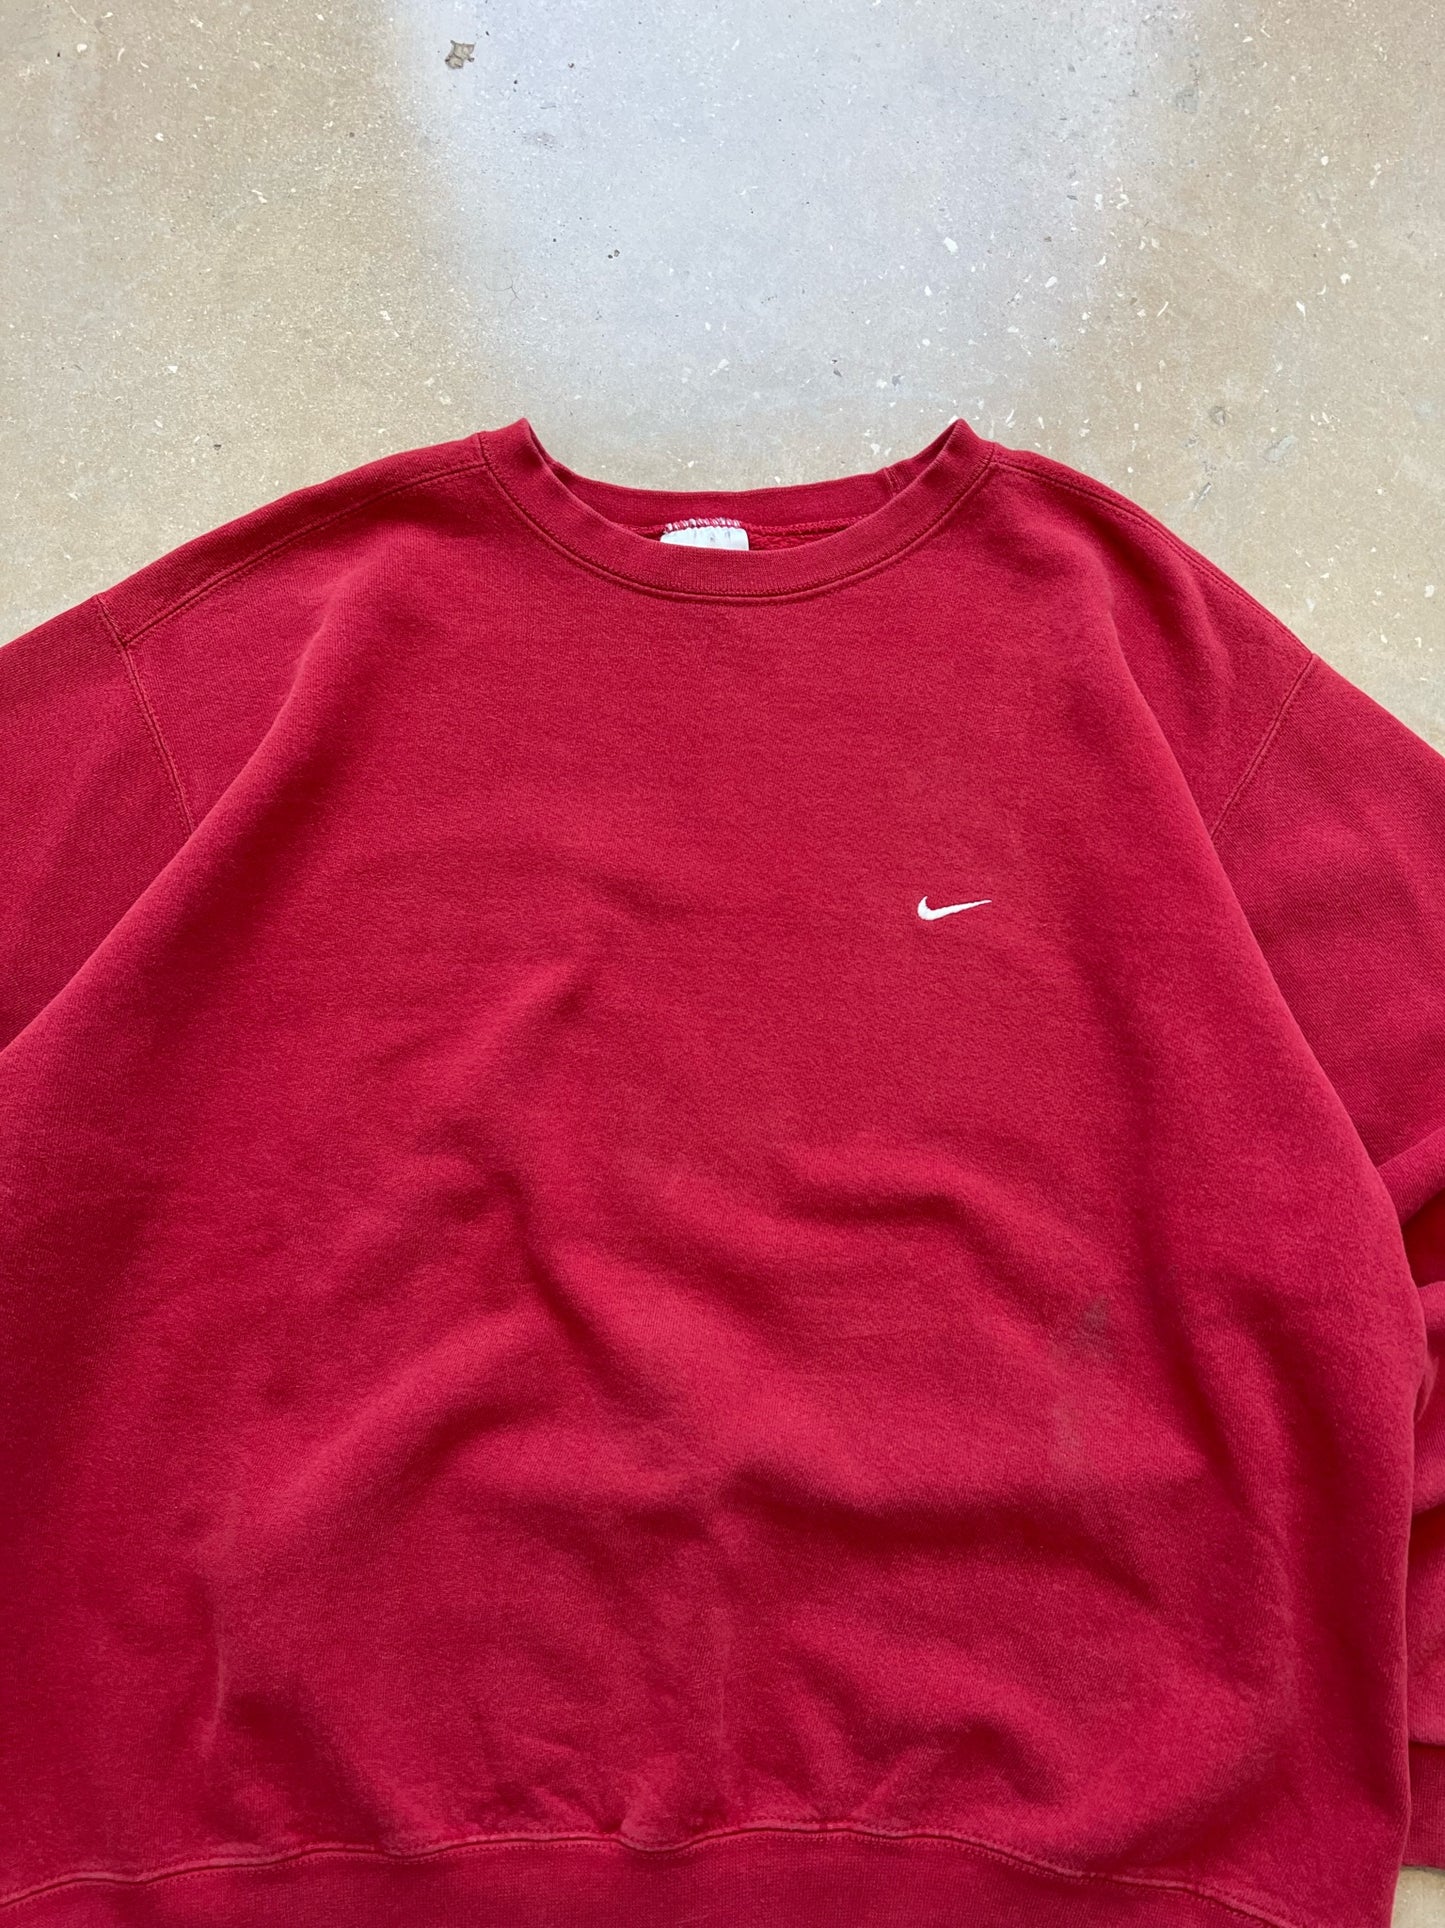 90's Red Nike Crewneck XL